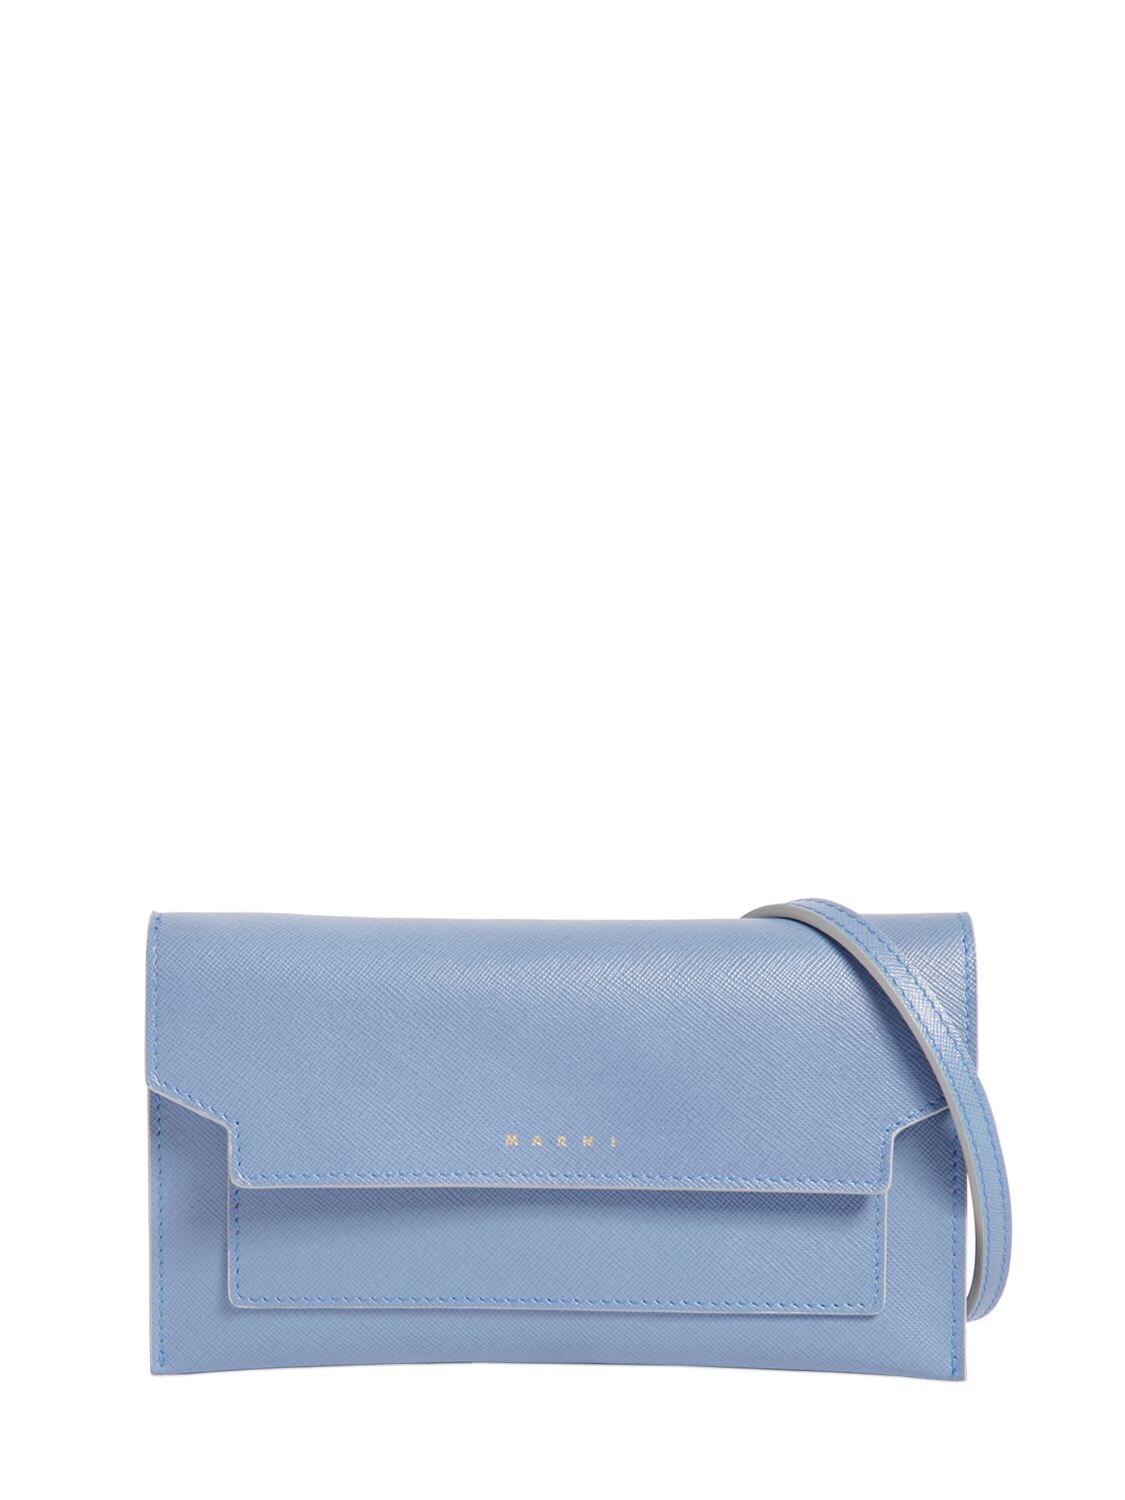 Marni Trunk Wallet Leather Crossbody Bag In Sky Blue